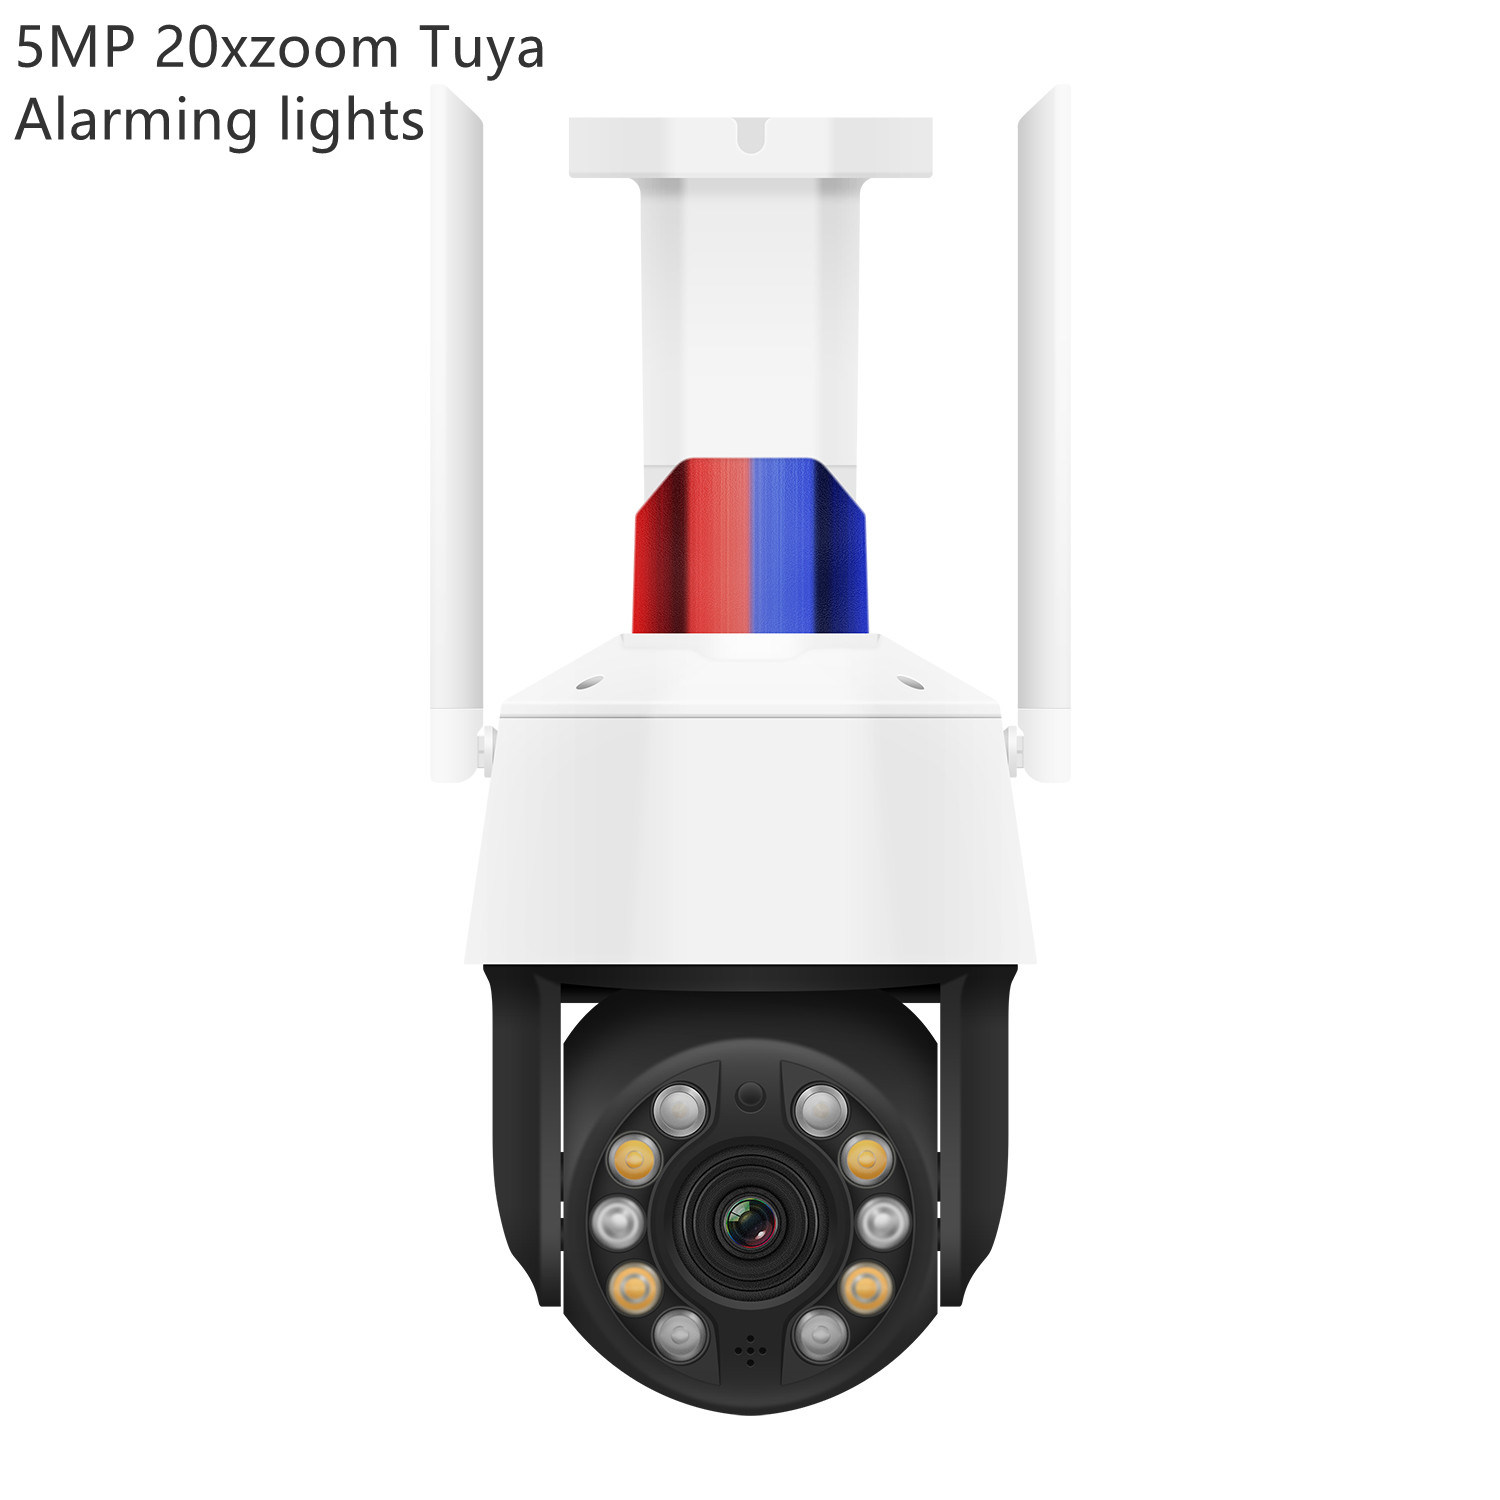 WiFi Camera 5MP 20xzoom Outdoor PTZ Camera IP Camera 2-Way Audio Waterproof Tuya CCTV Dome with Alarming Lights